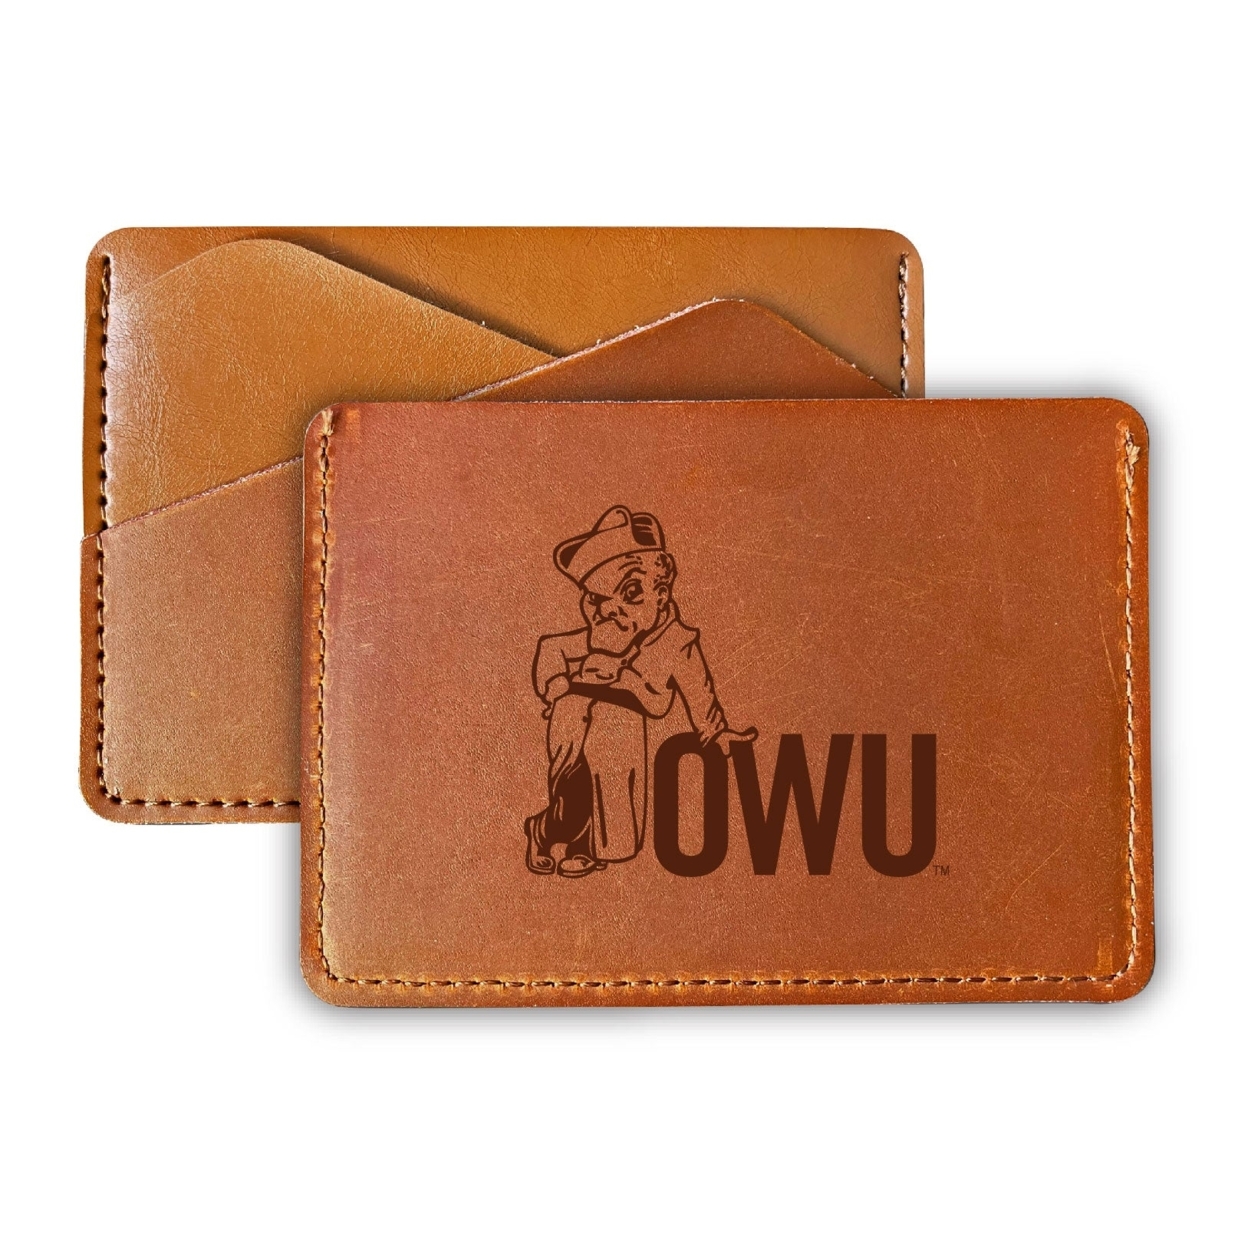 Ohio Wesleyan University College Leather Card Holder Wallet